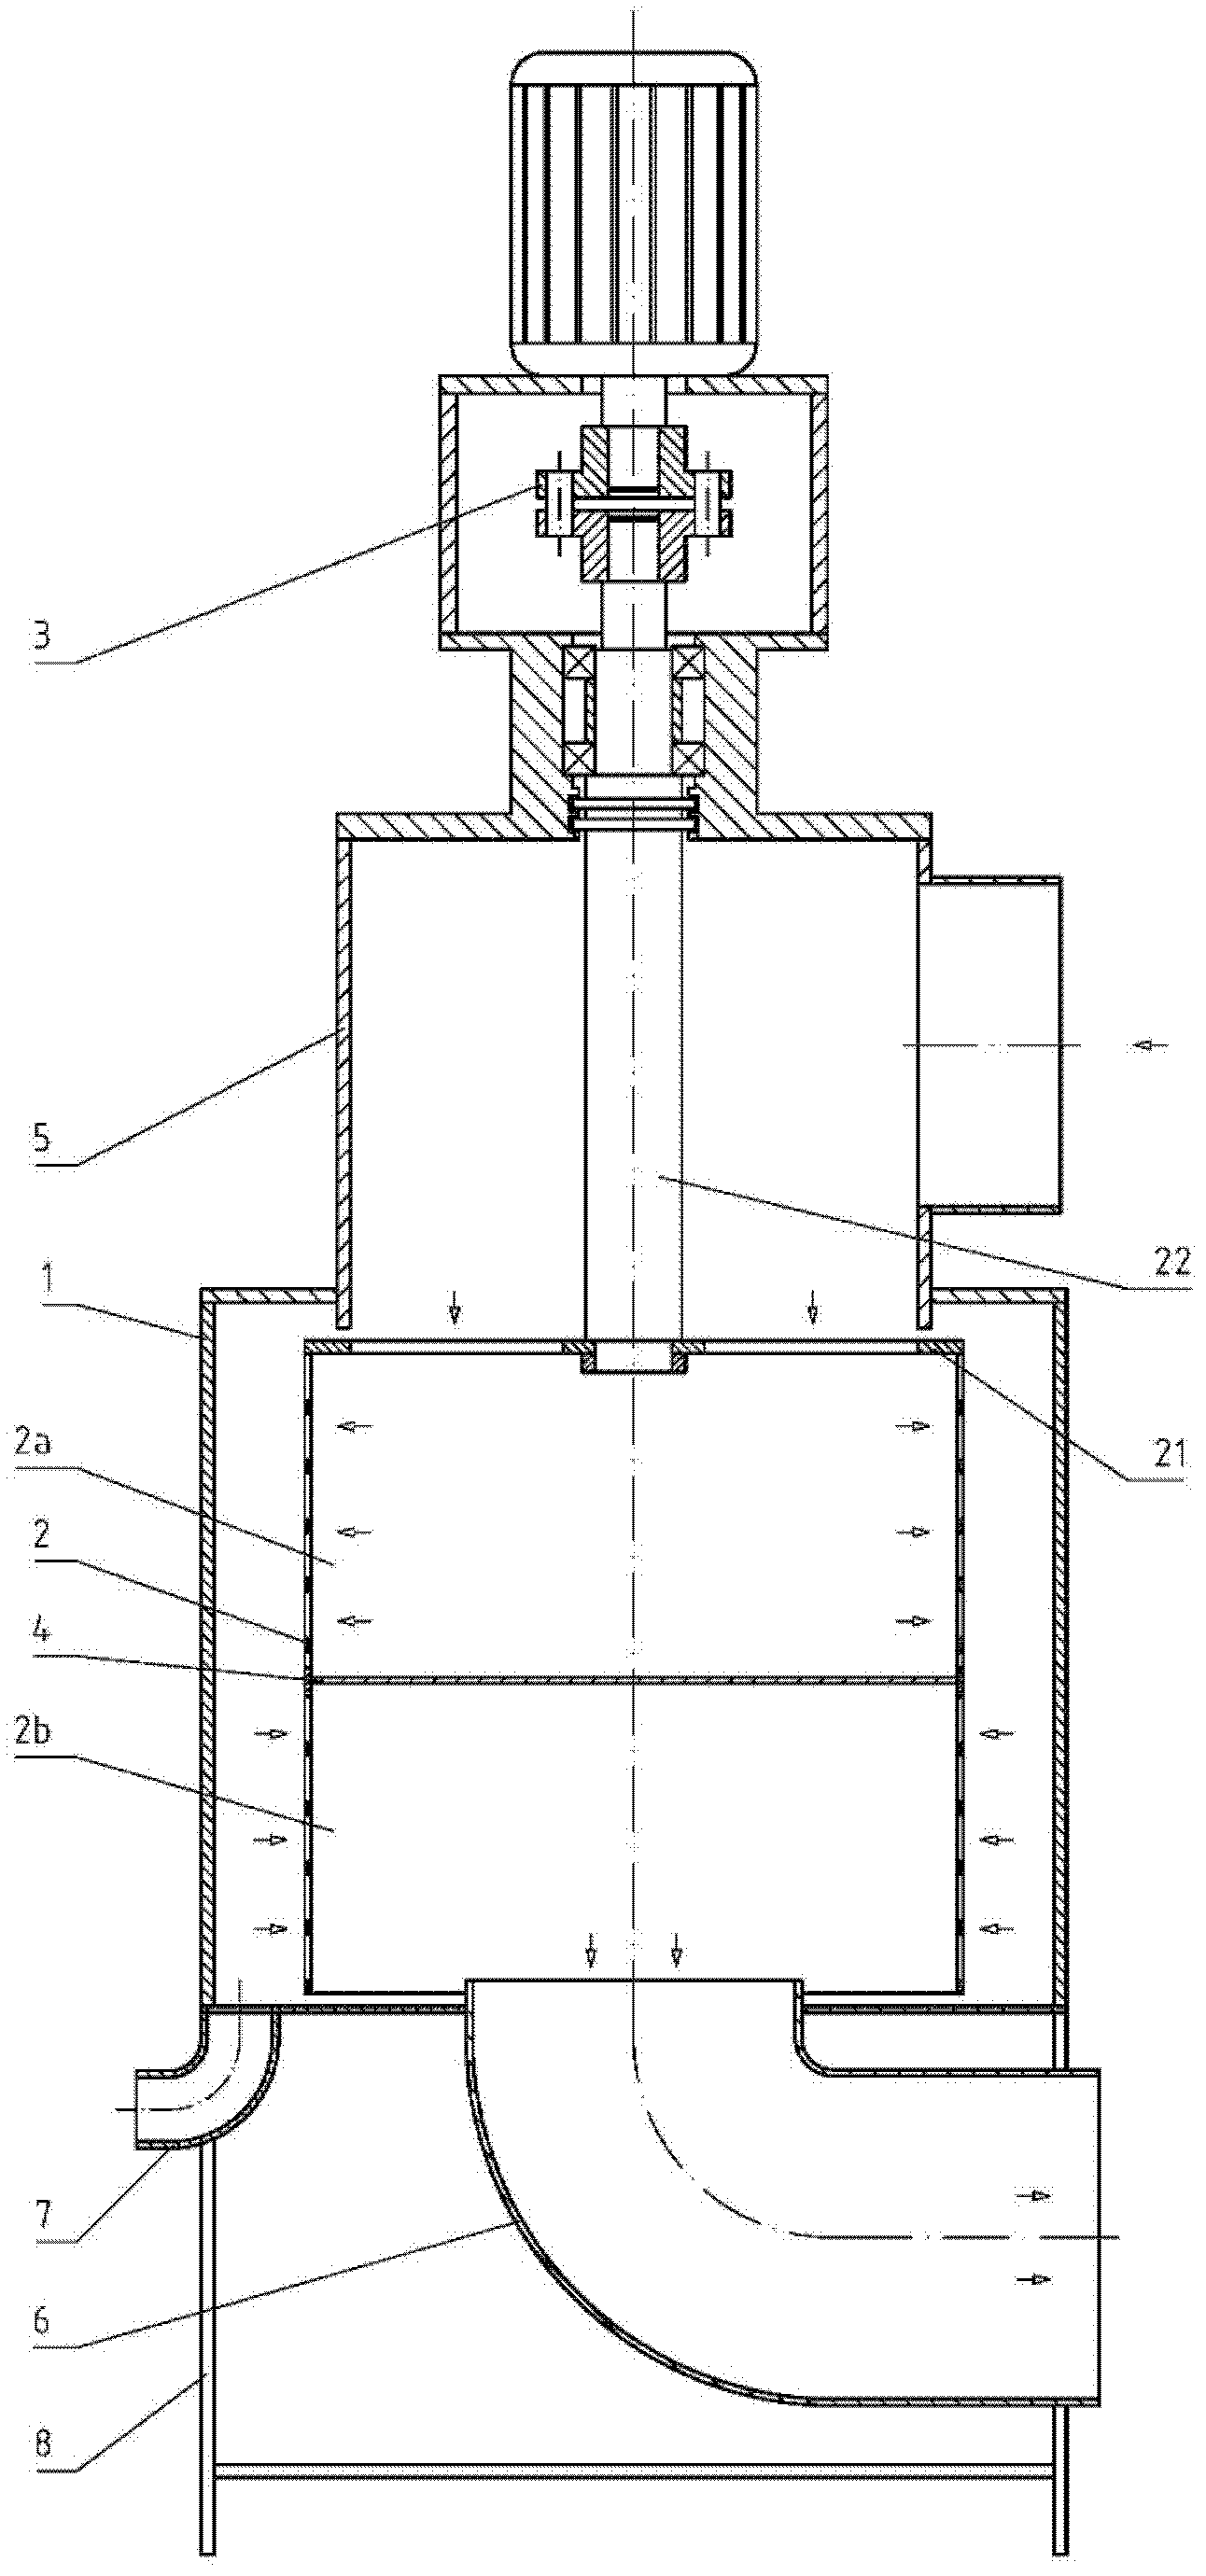 Active centrifugal gas-liquid separation device